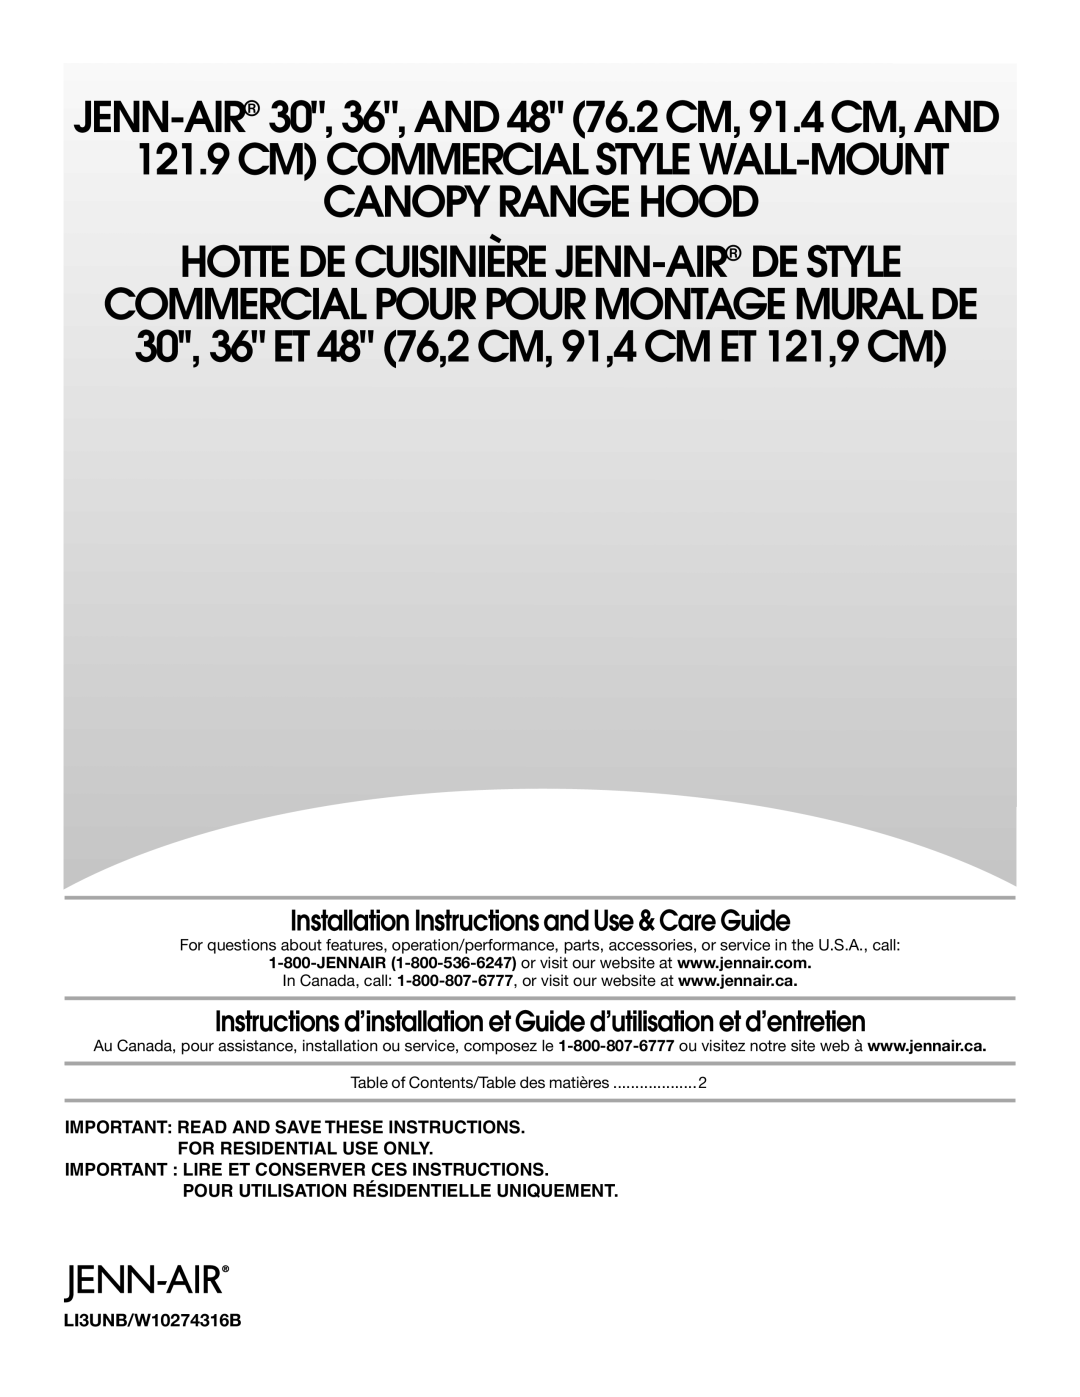 Jenn-Air LI3UNB/W10274316B installation instructions CM Commercial Style WALL-MOUNT Canopy Range Hood 